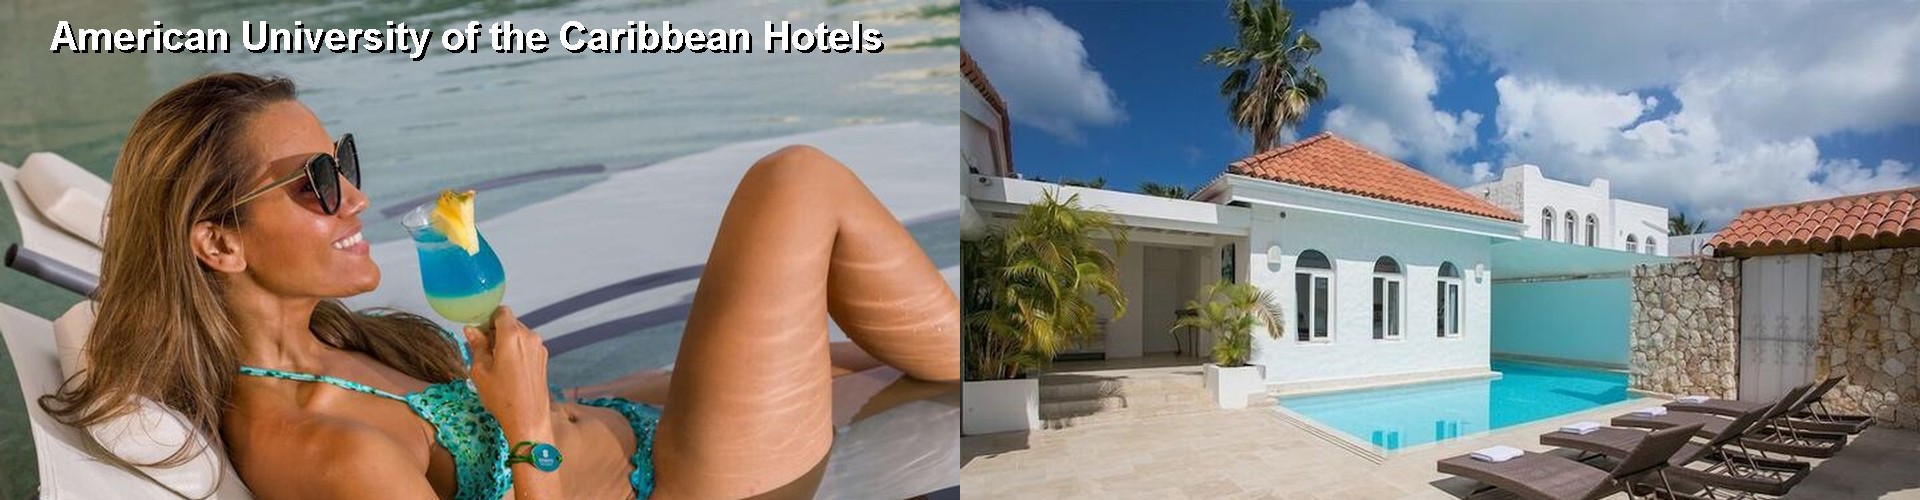 5 Best Hotels near American University of the Caribbean